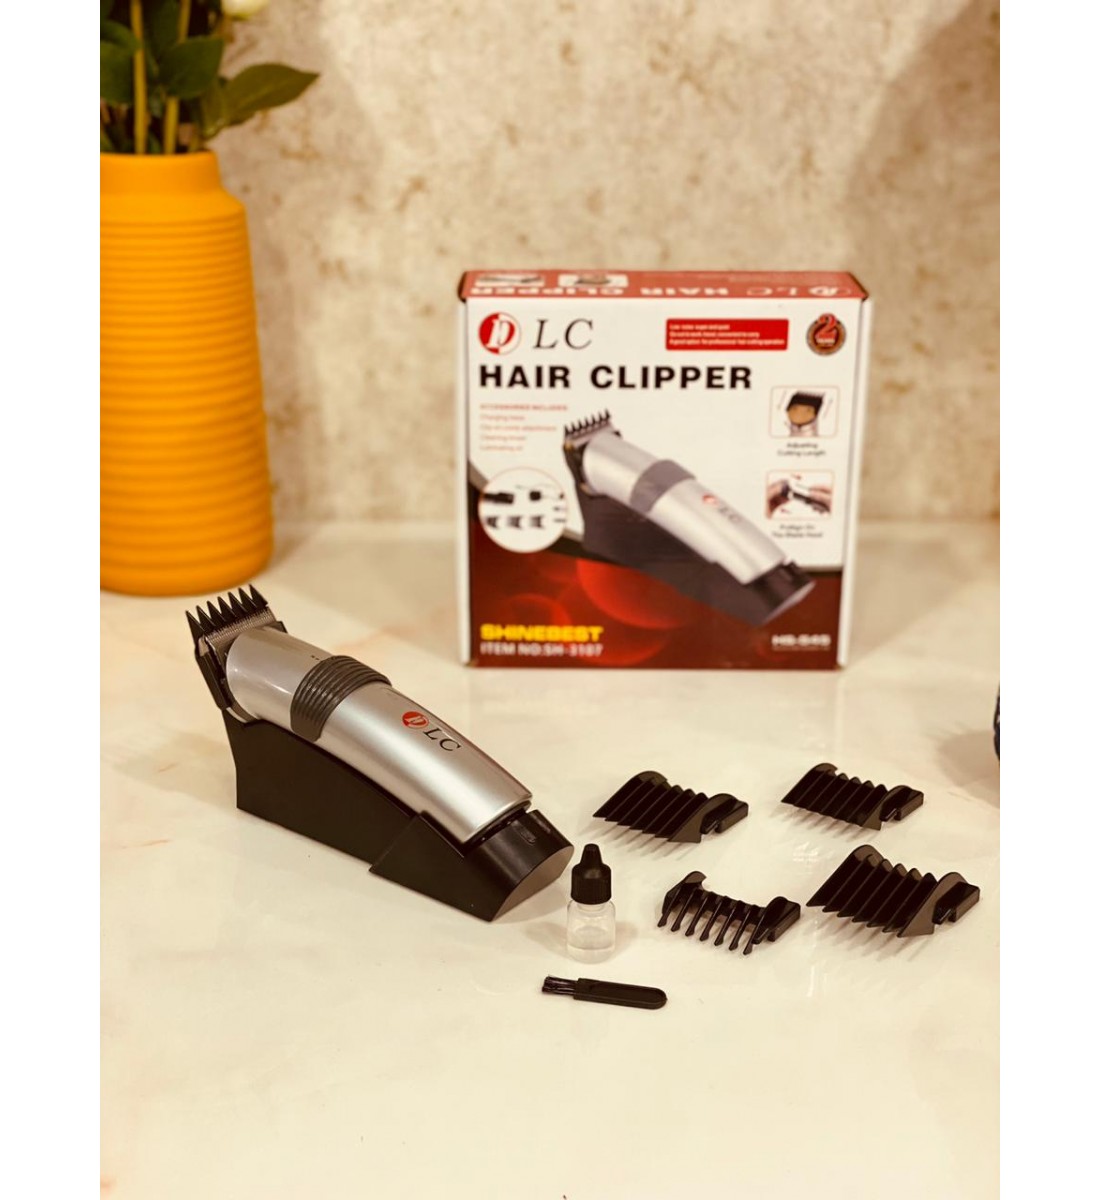 DLC professional hair clipper for men